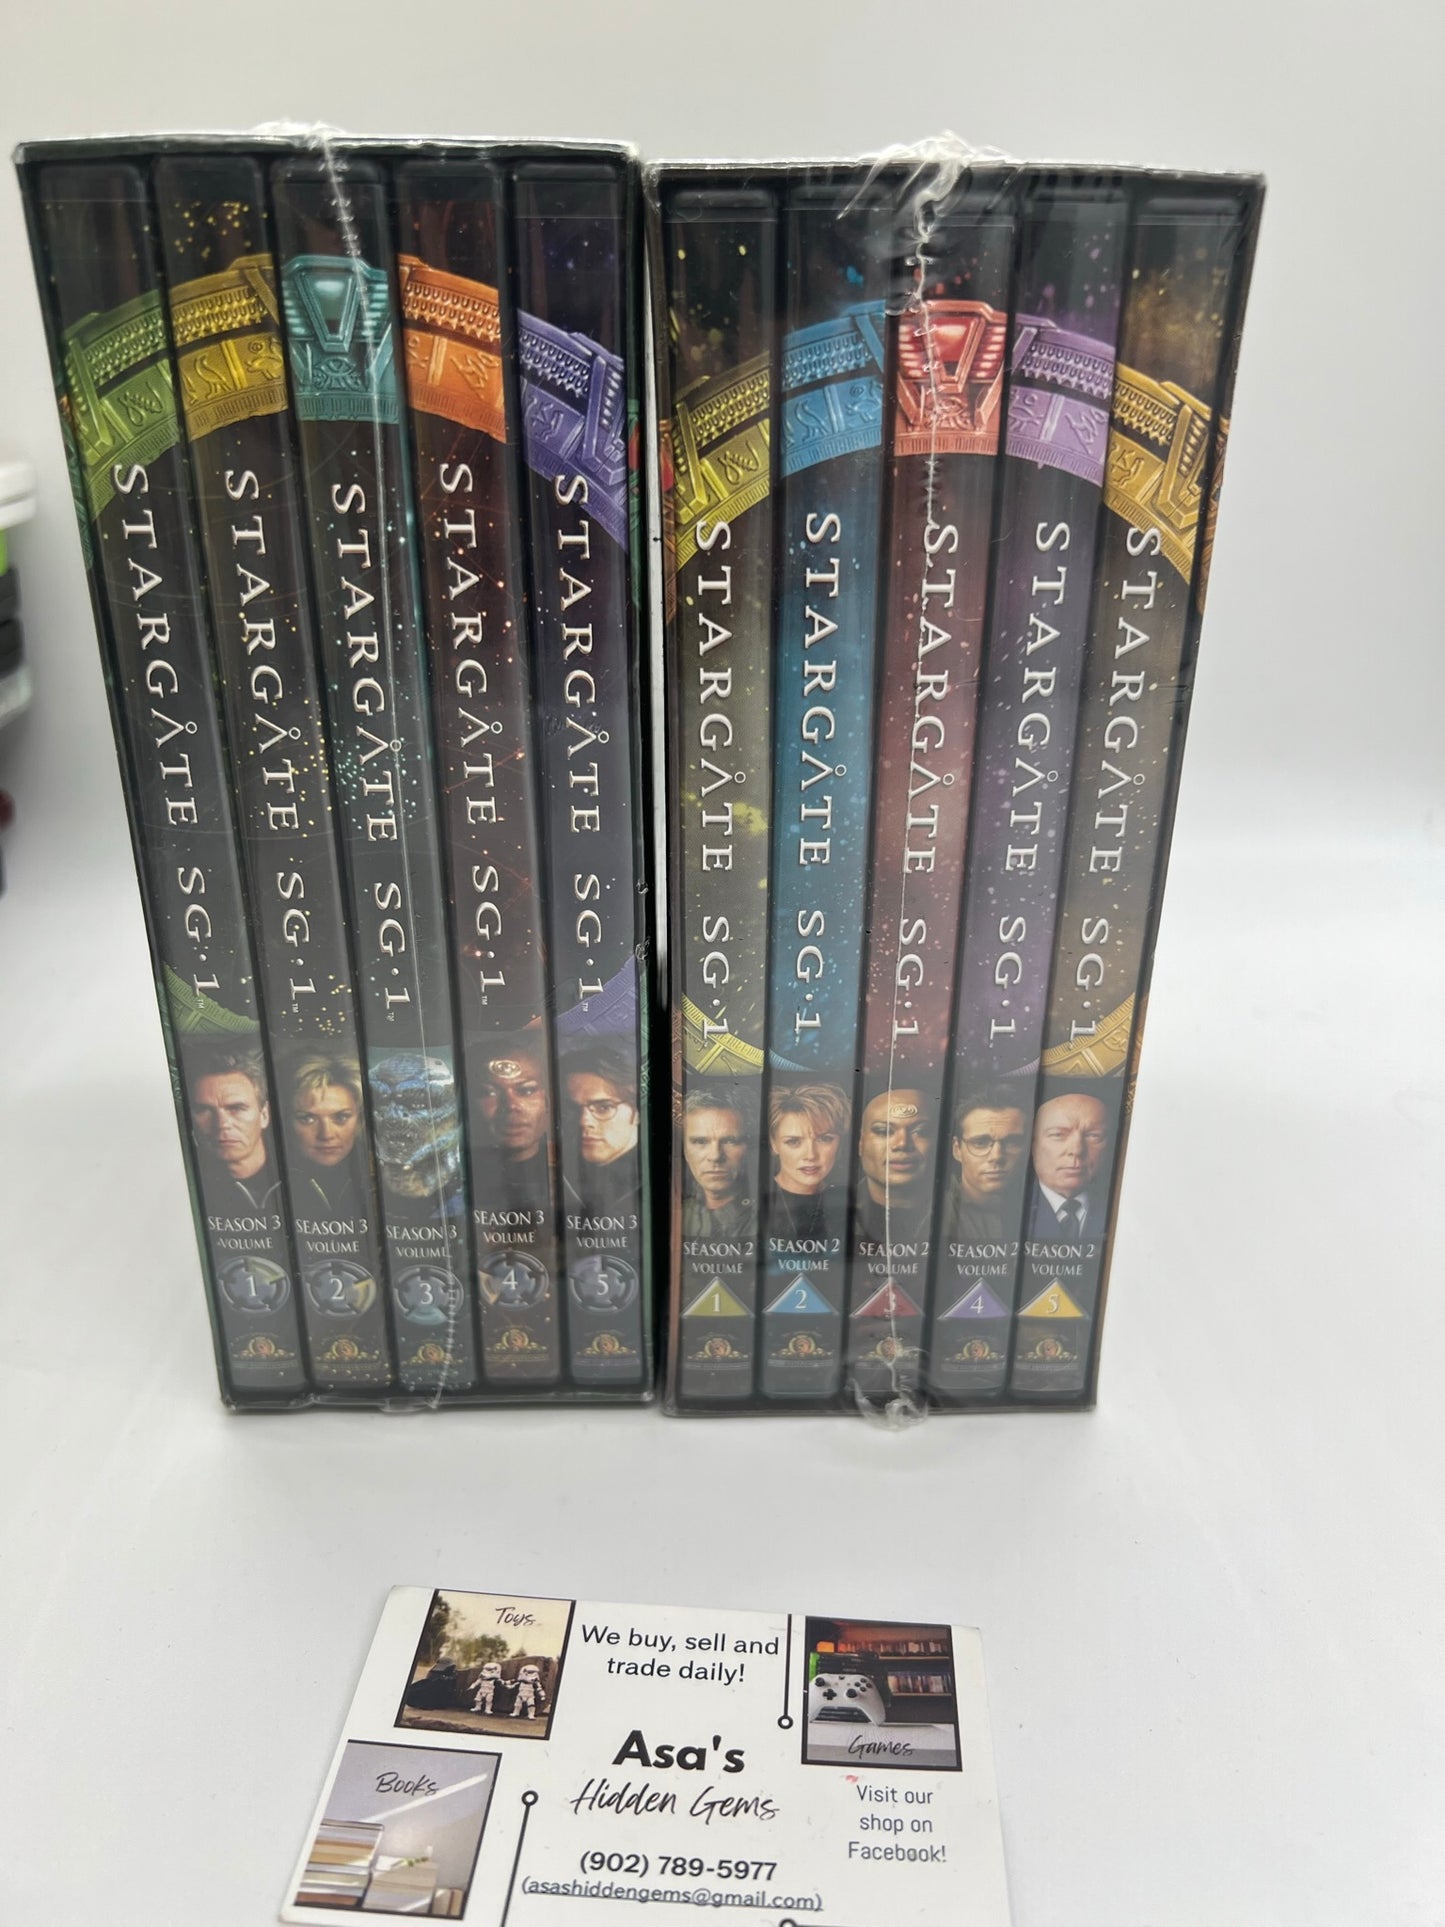 Stargate SG-1 The Series DVD *Seasons 2-3* Complete Season DVD Boxes New Sealed